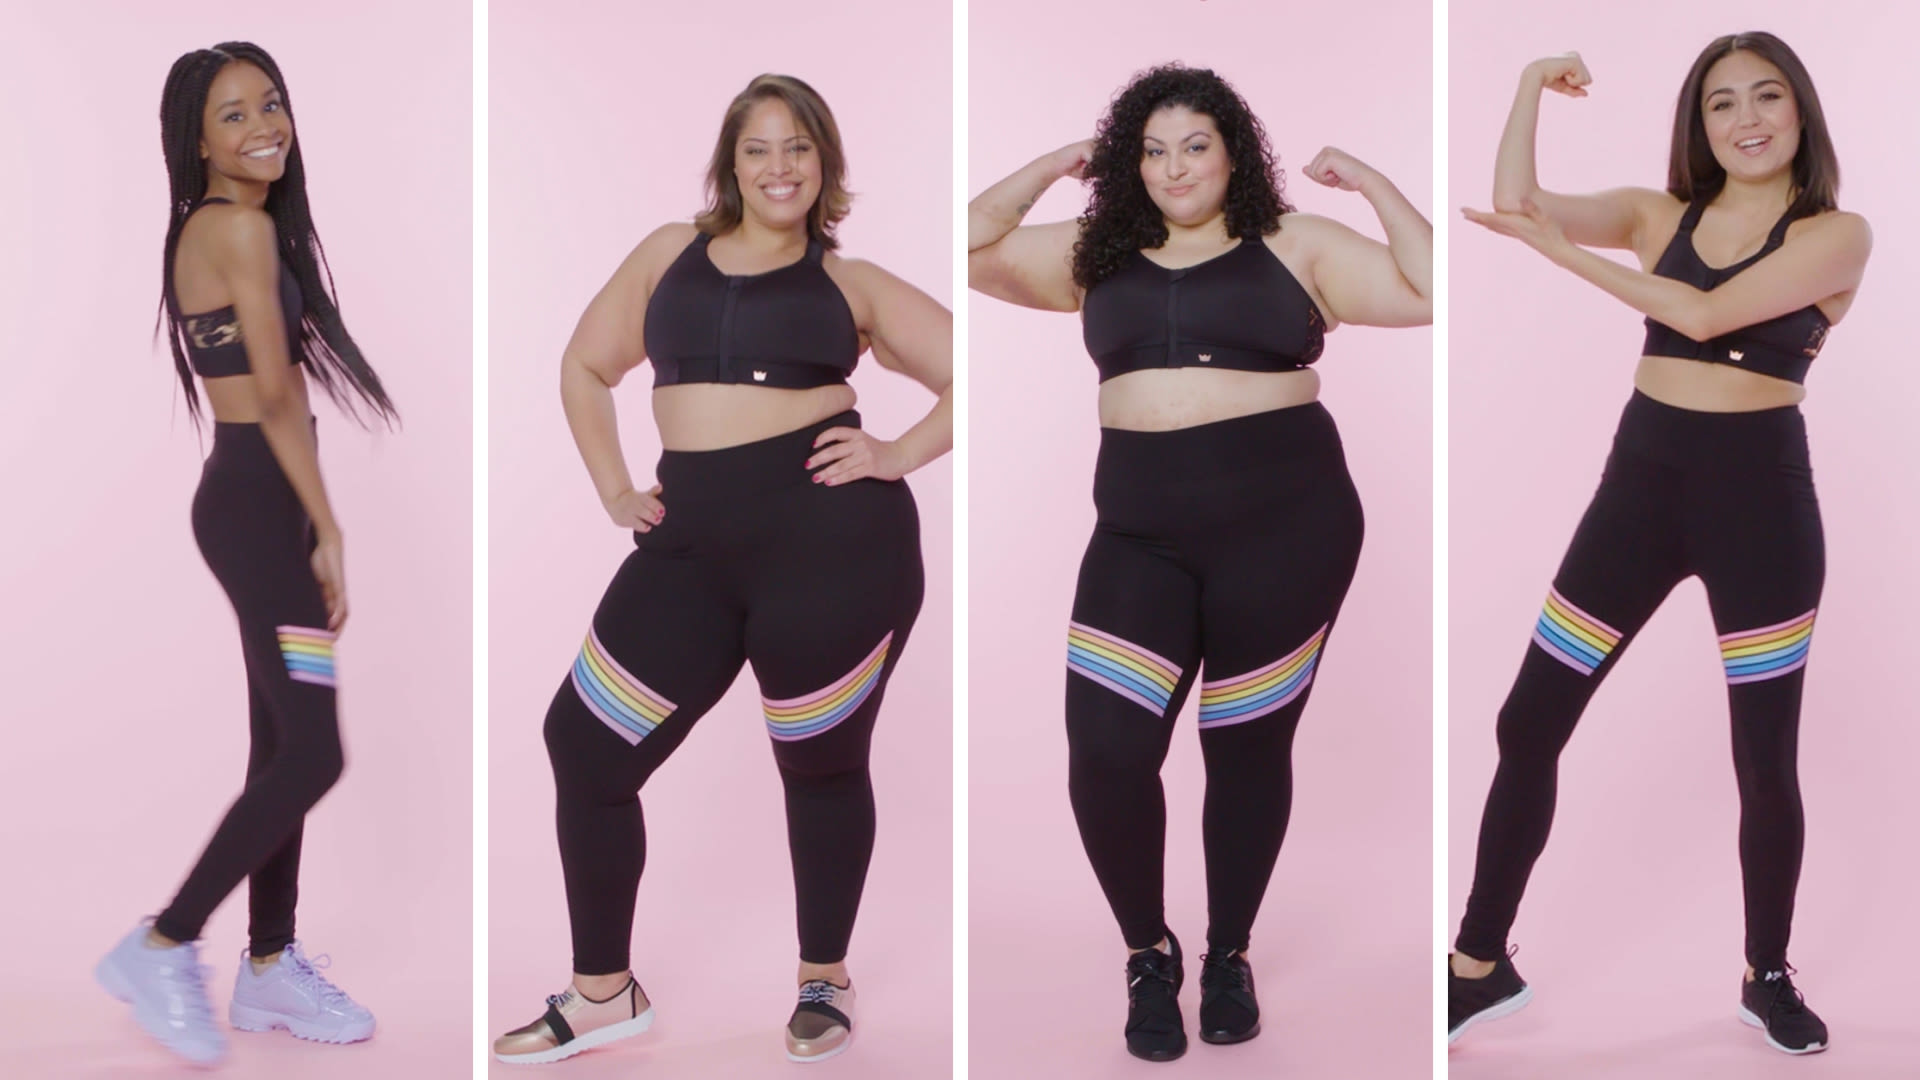 Watch Women Sizes 0 Through 28 Try on the Same Sports Bra, Body Talk